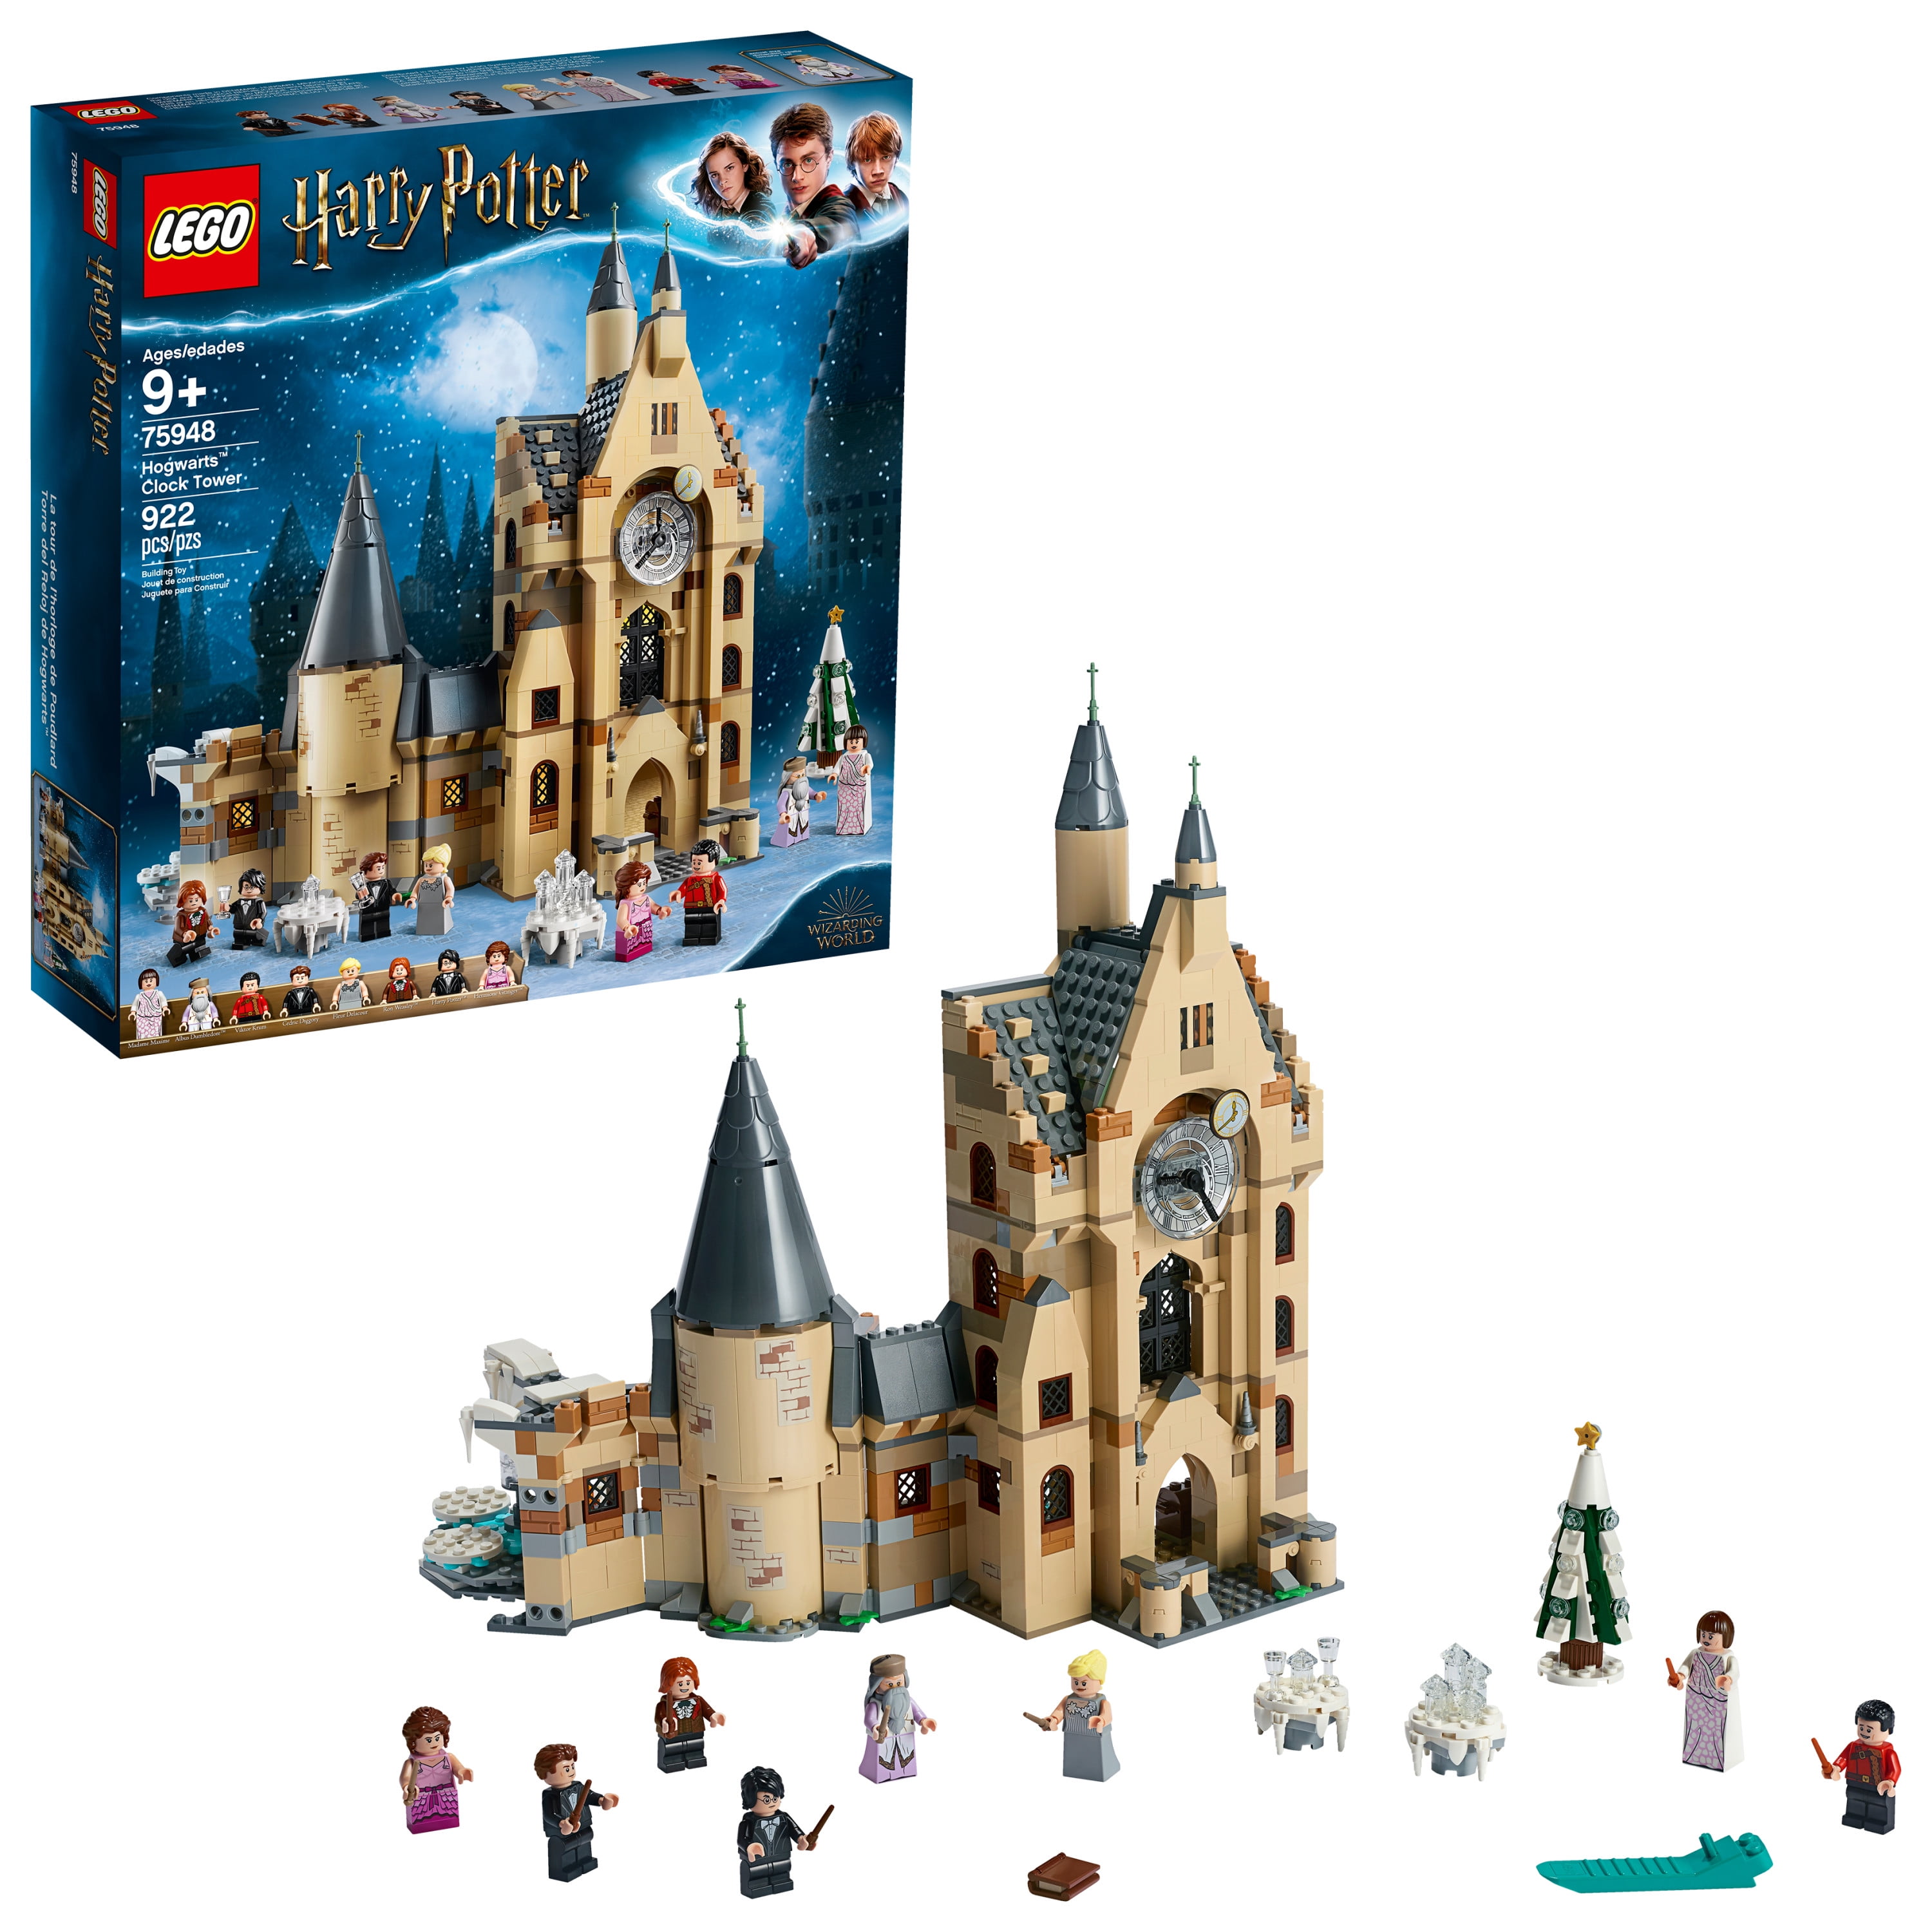 Phobia Refine Senate LEGO Harry Potter and The Goblet of Fire Hogwarts Castle Clock Tower 75948  - Walmart.com